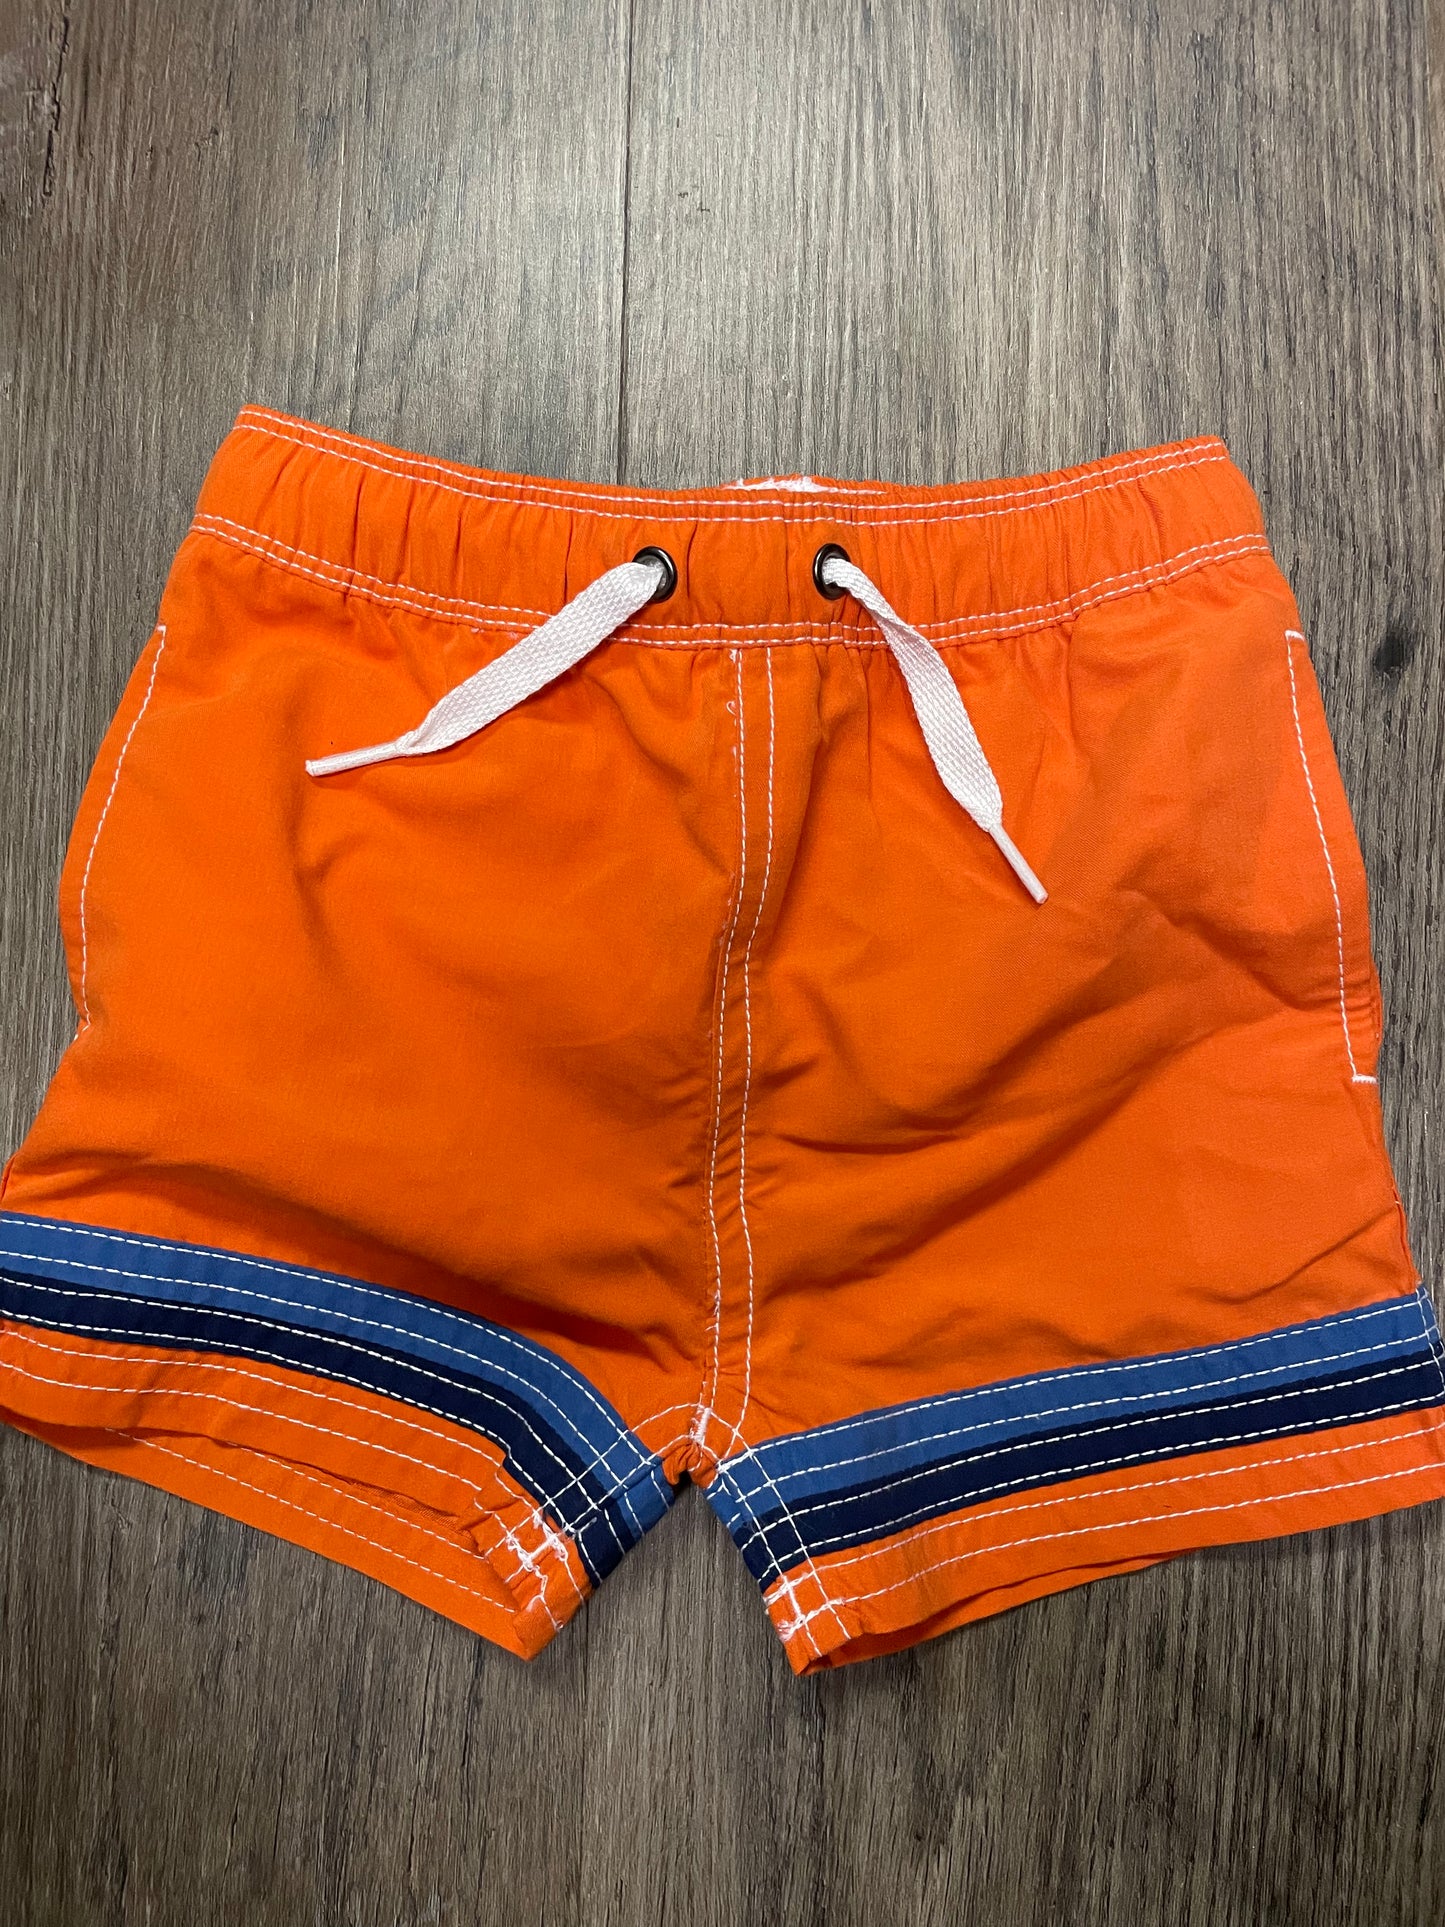 New boy 18-24 months HA swim shorts orange and stripe